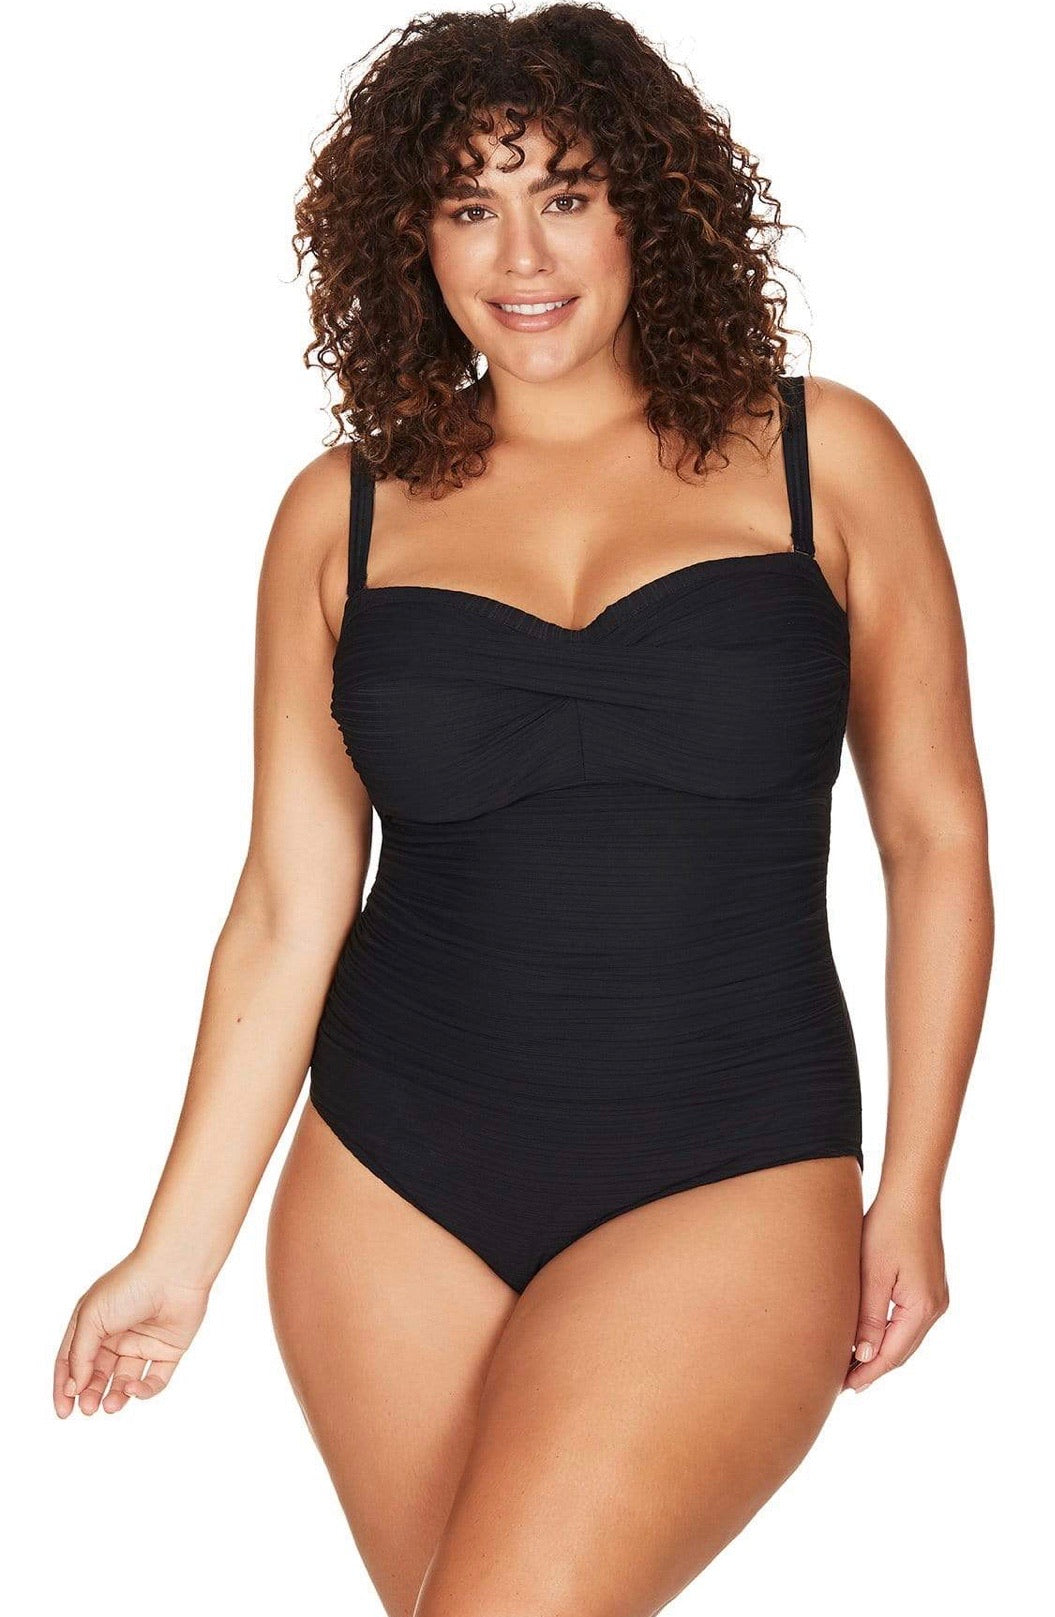 Women's Plus Size One Piece Swimsuit - Neon Trim / Black